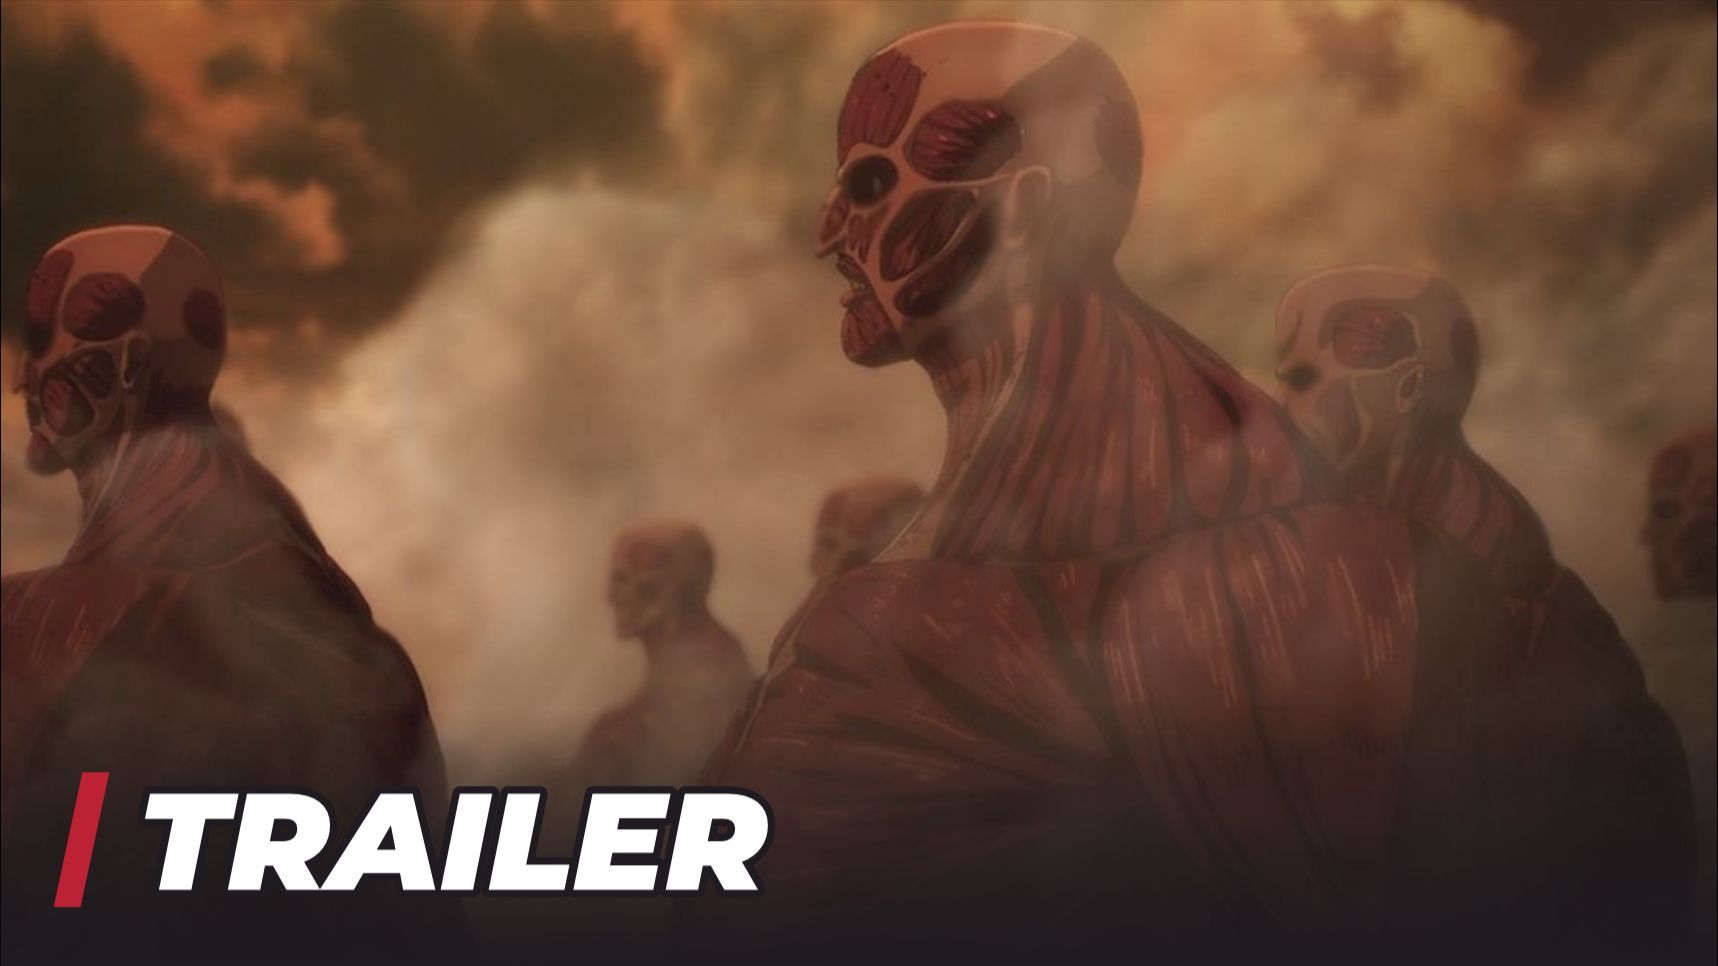 Attack on Titan Final Season Part 3' Lands New Trailer Teasing Ultimate  Showdown